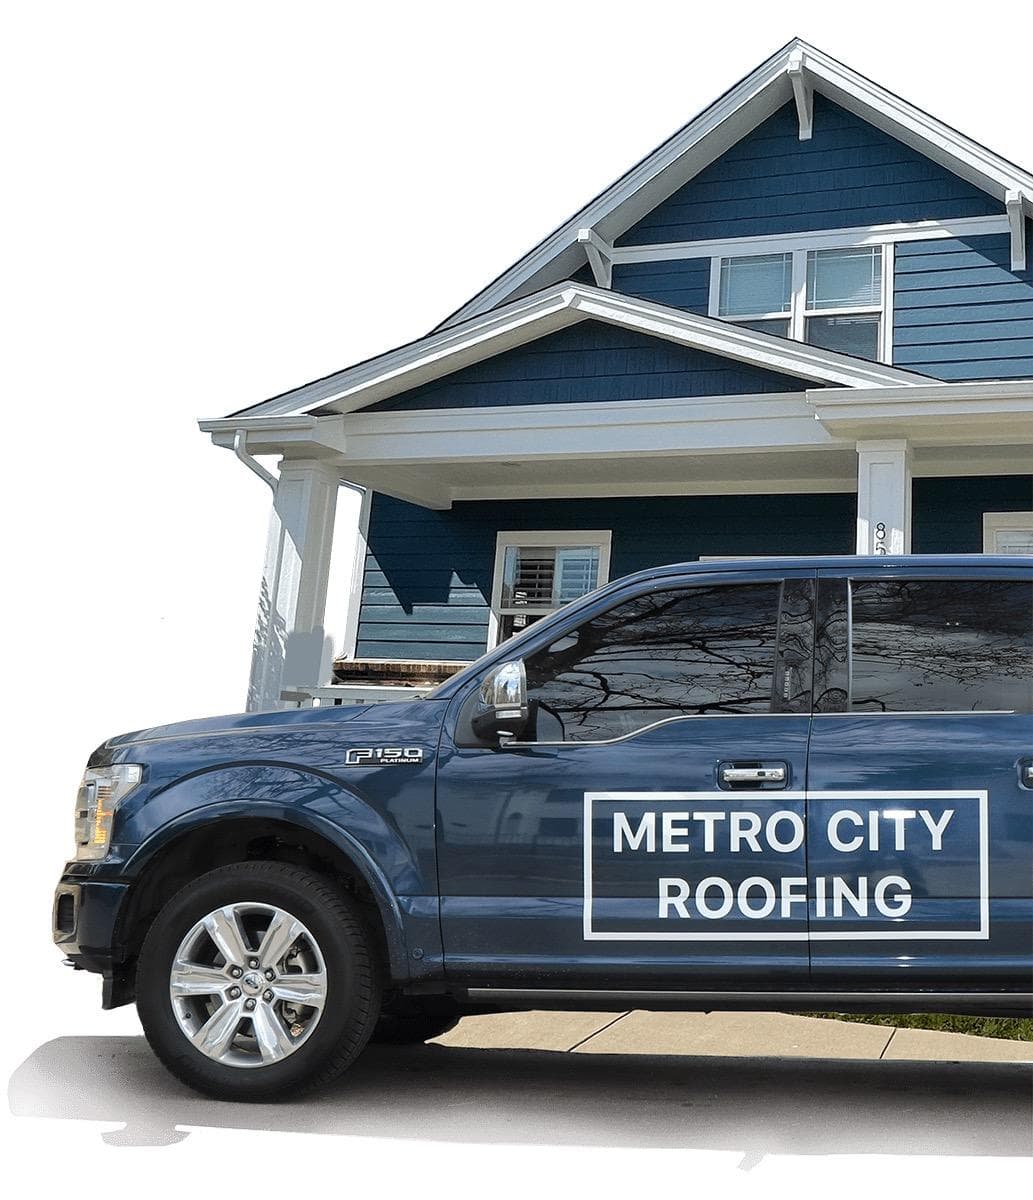 Metro City Roofing truck